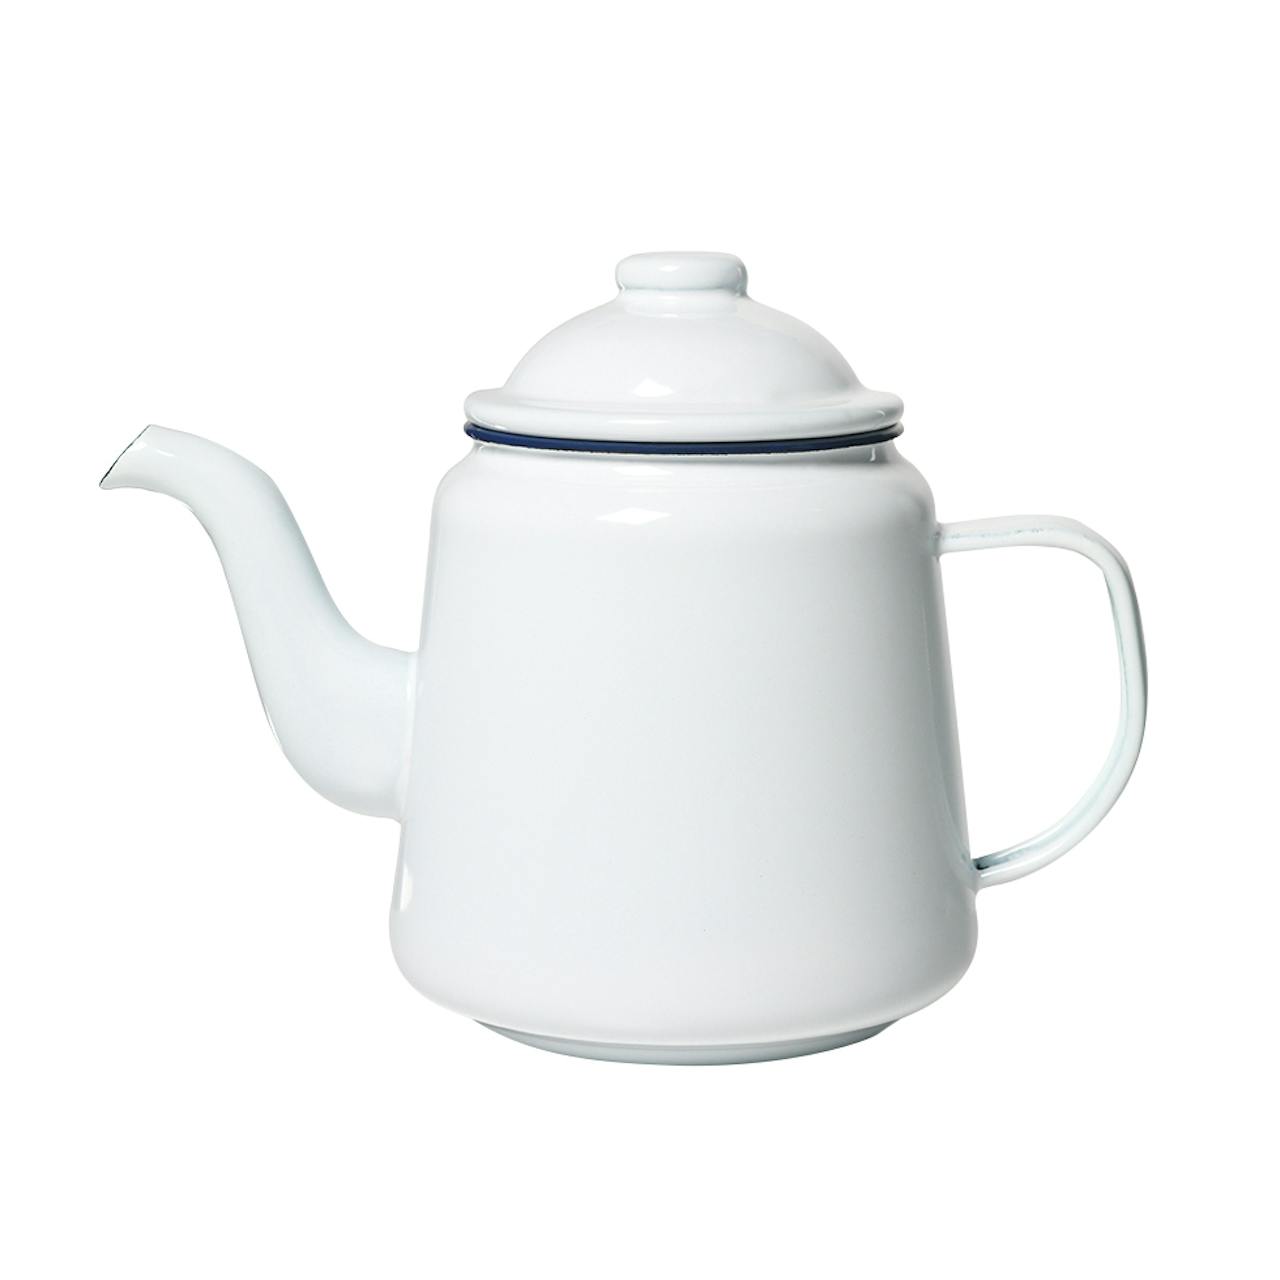 Falcon Enamelware Enamelware Teapot